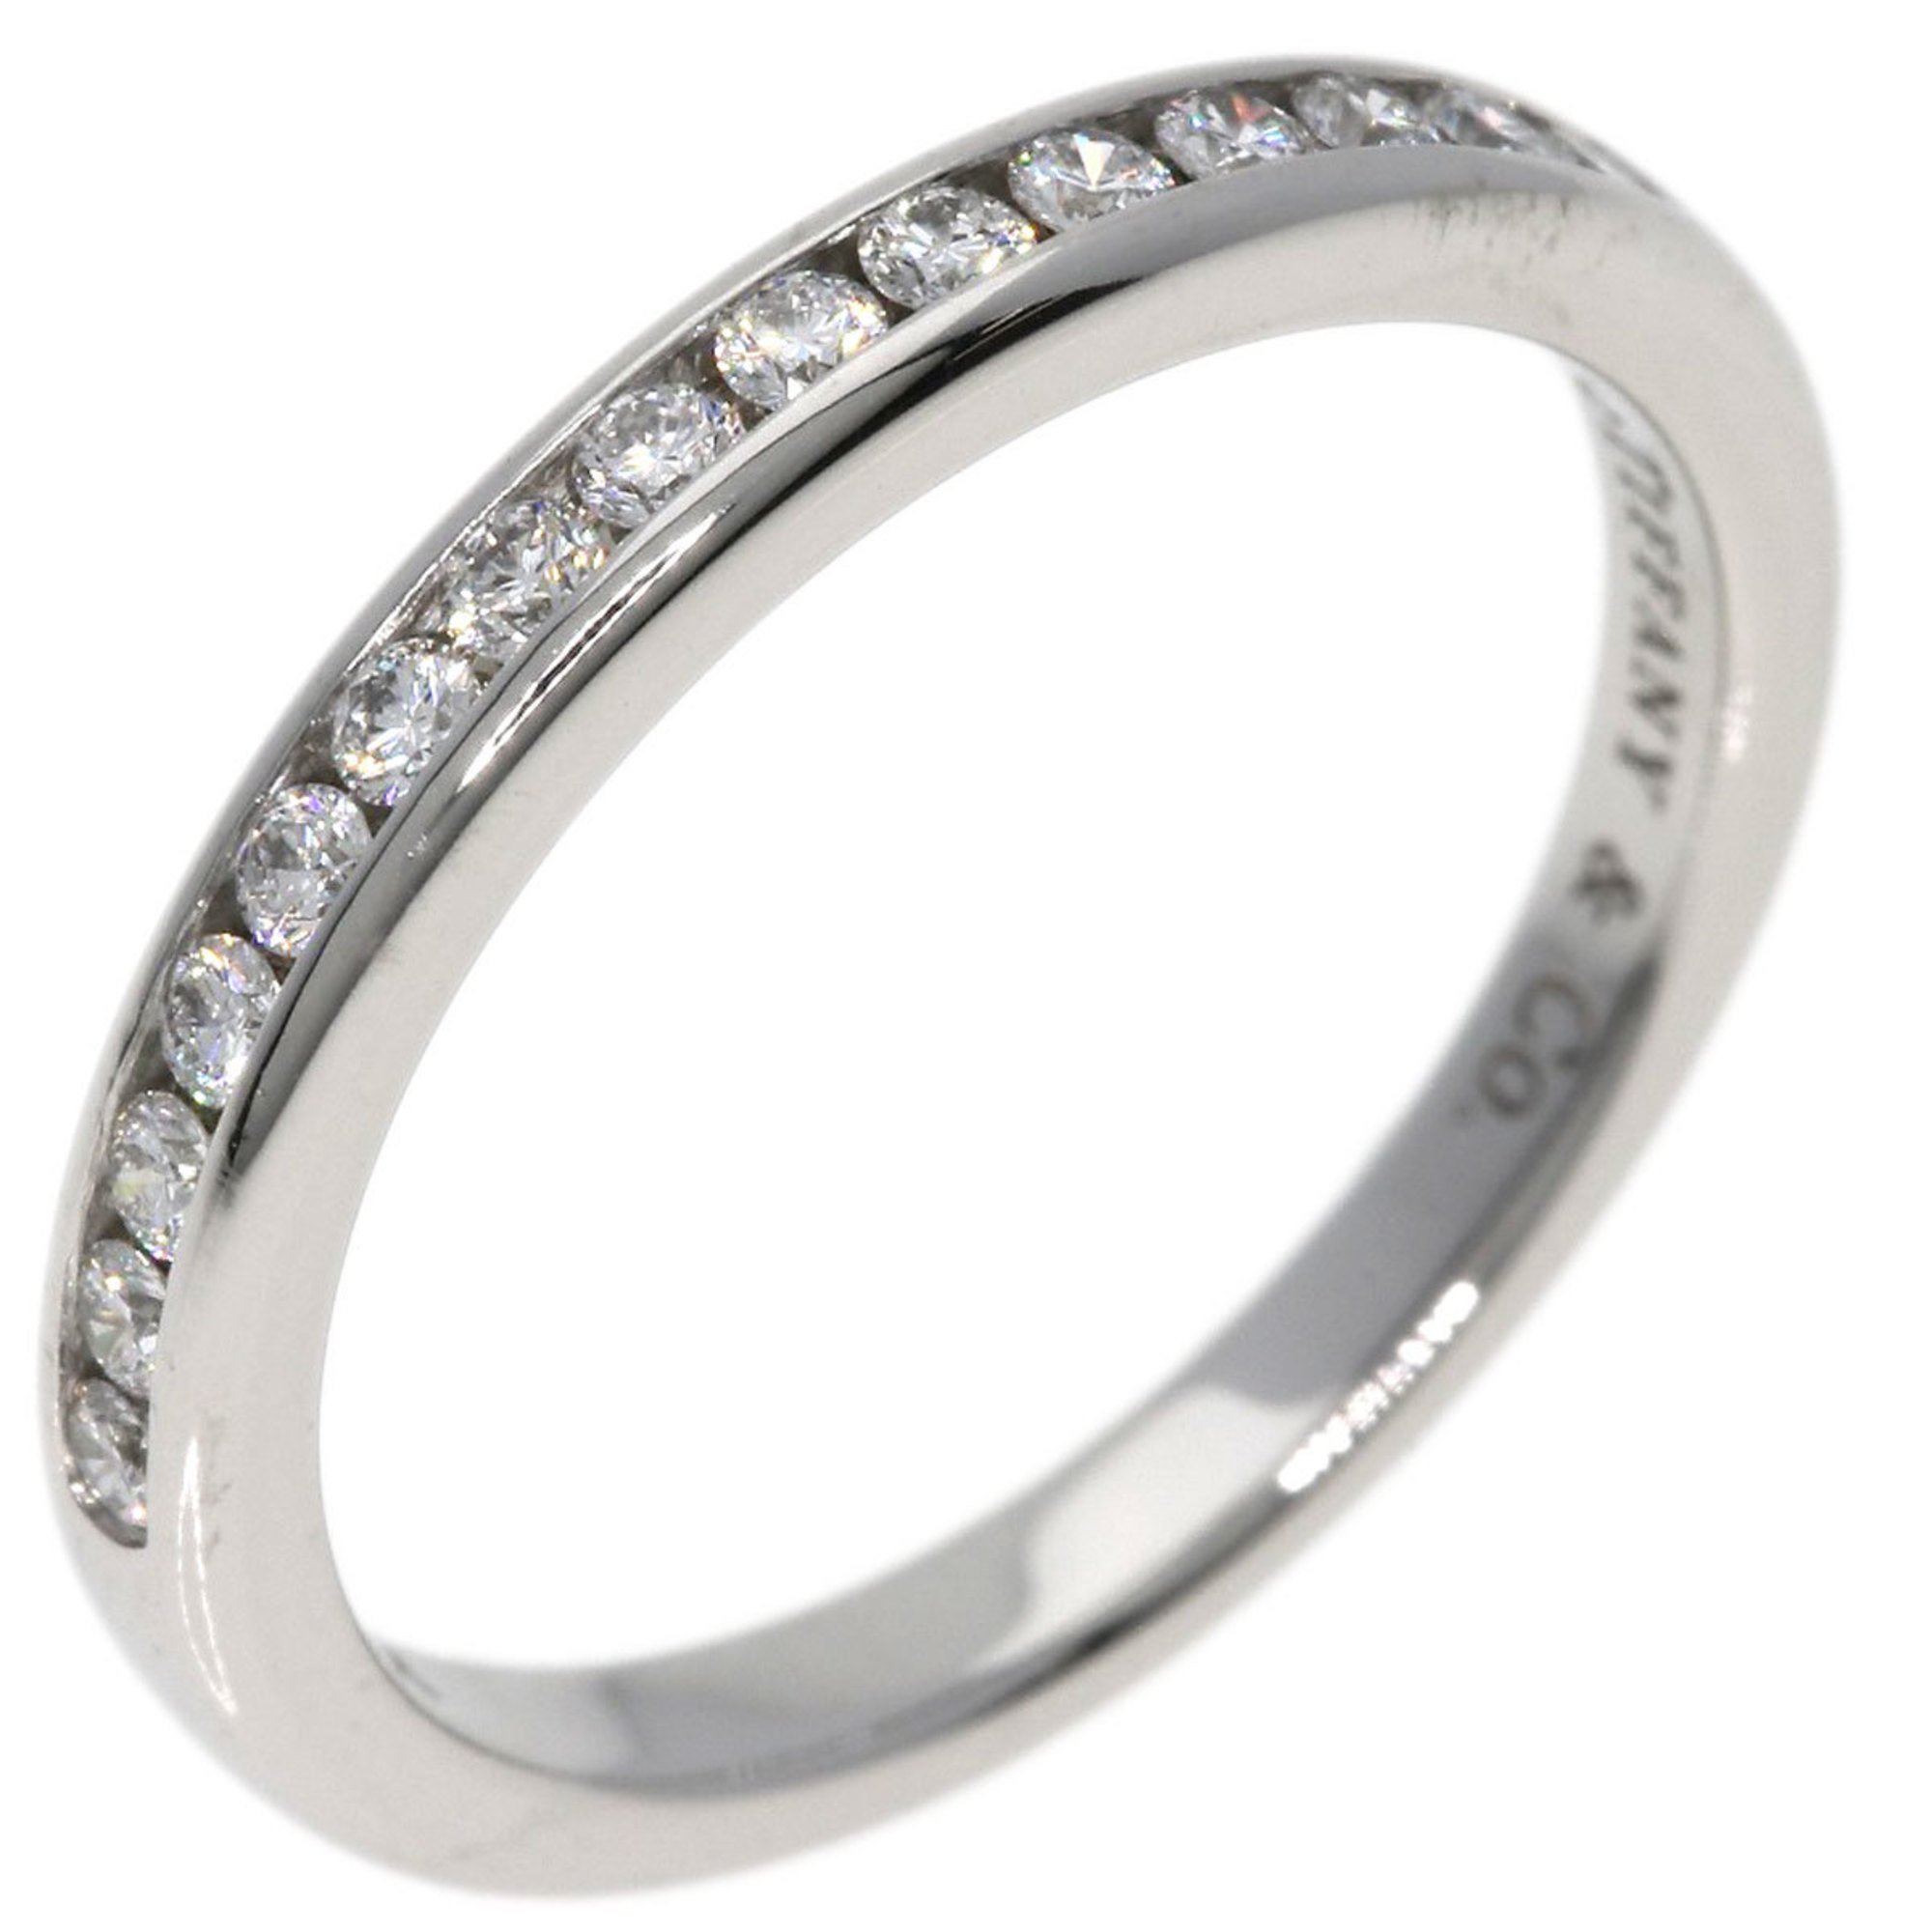 Tiffany Half Circle Channel Setting Diamond Ring, Platinum PT950, Women's